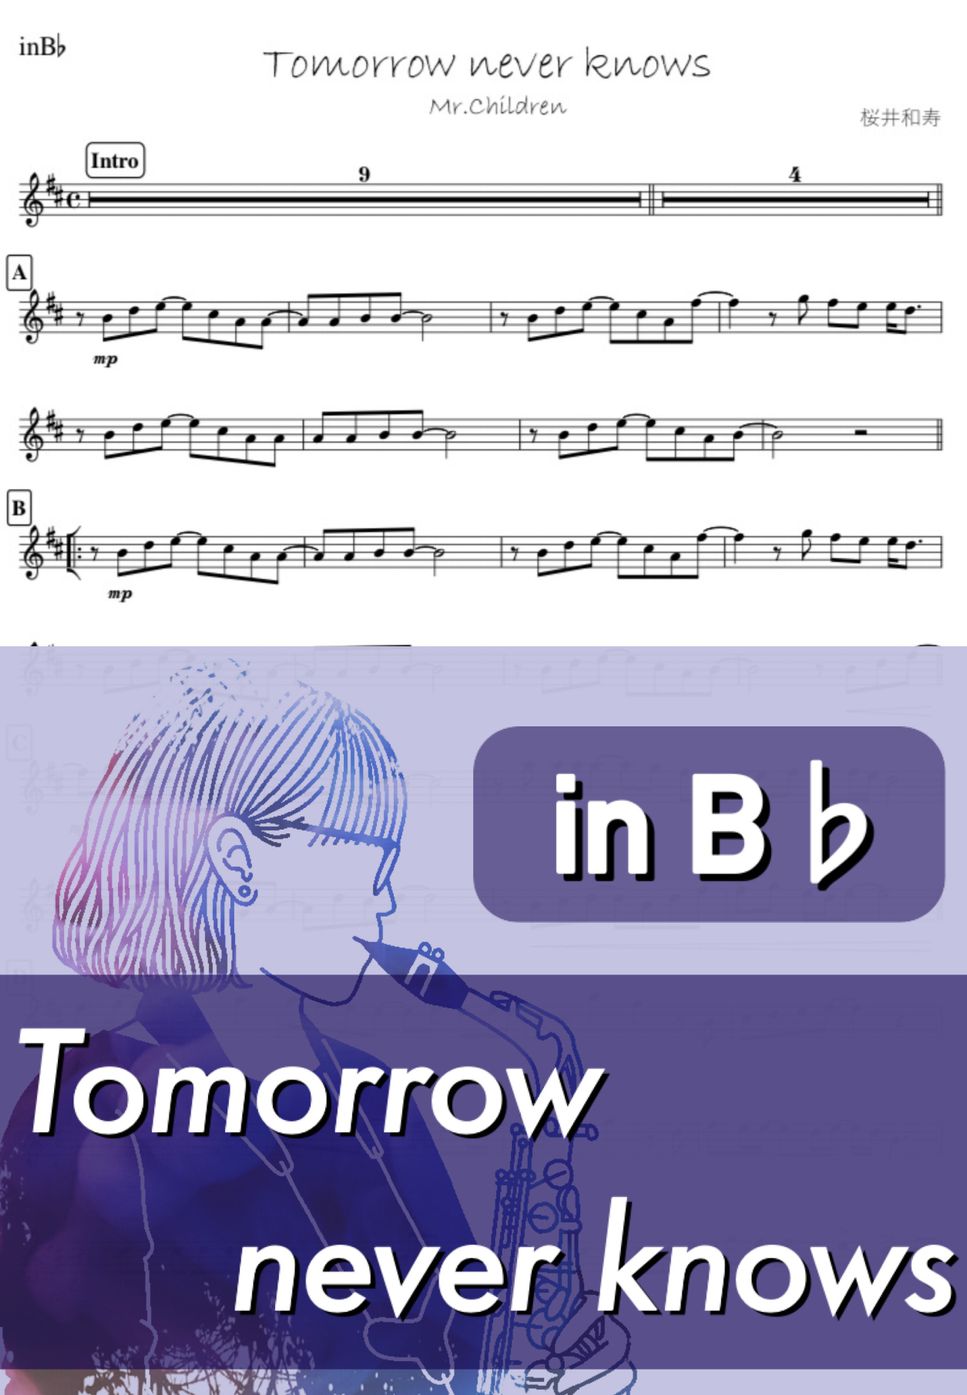 Mr.Children - Tomorrow never knows (B♭) by kanamusic